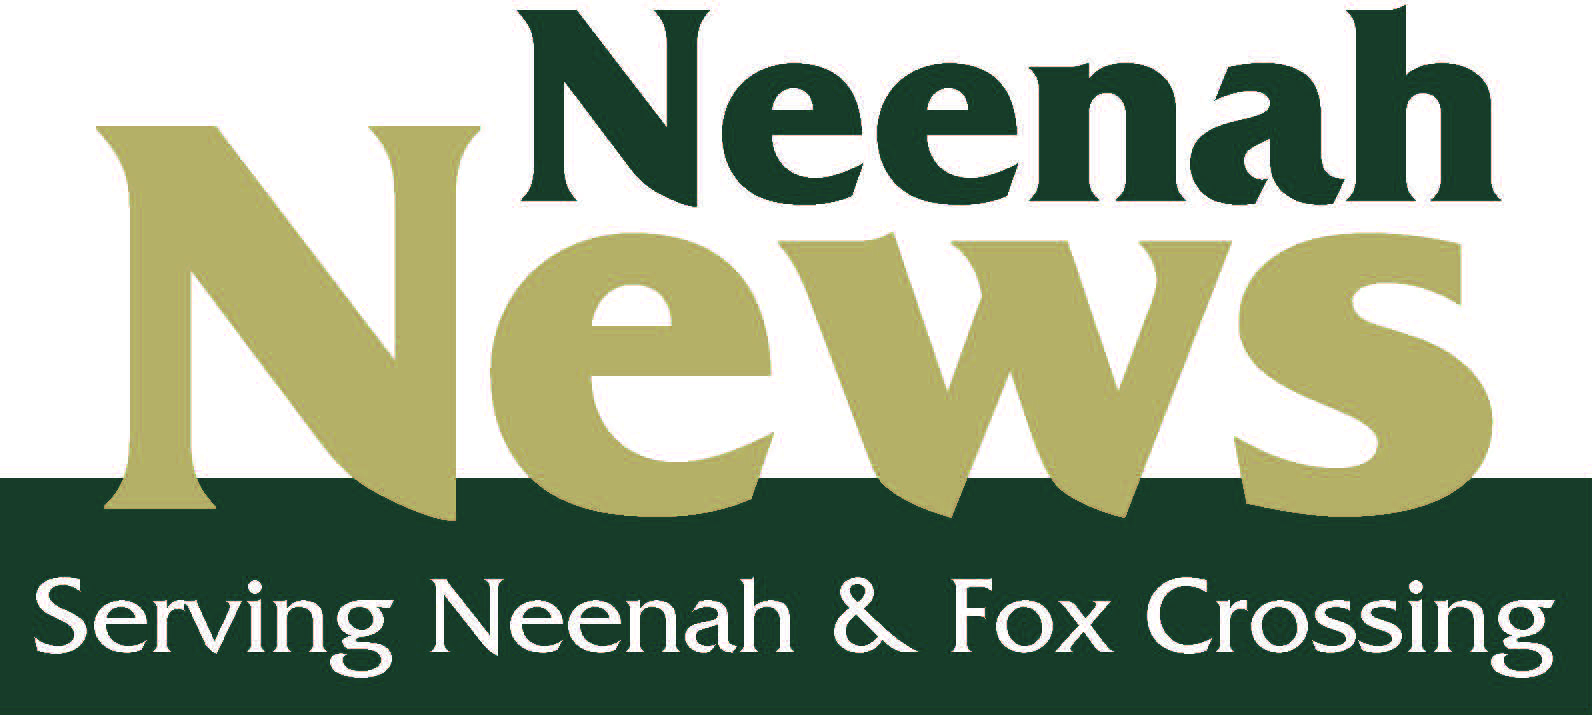 Neenah News logo. Tagline: Serving Neenah & Fox Crossing